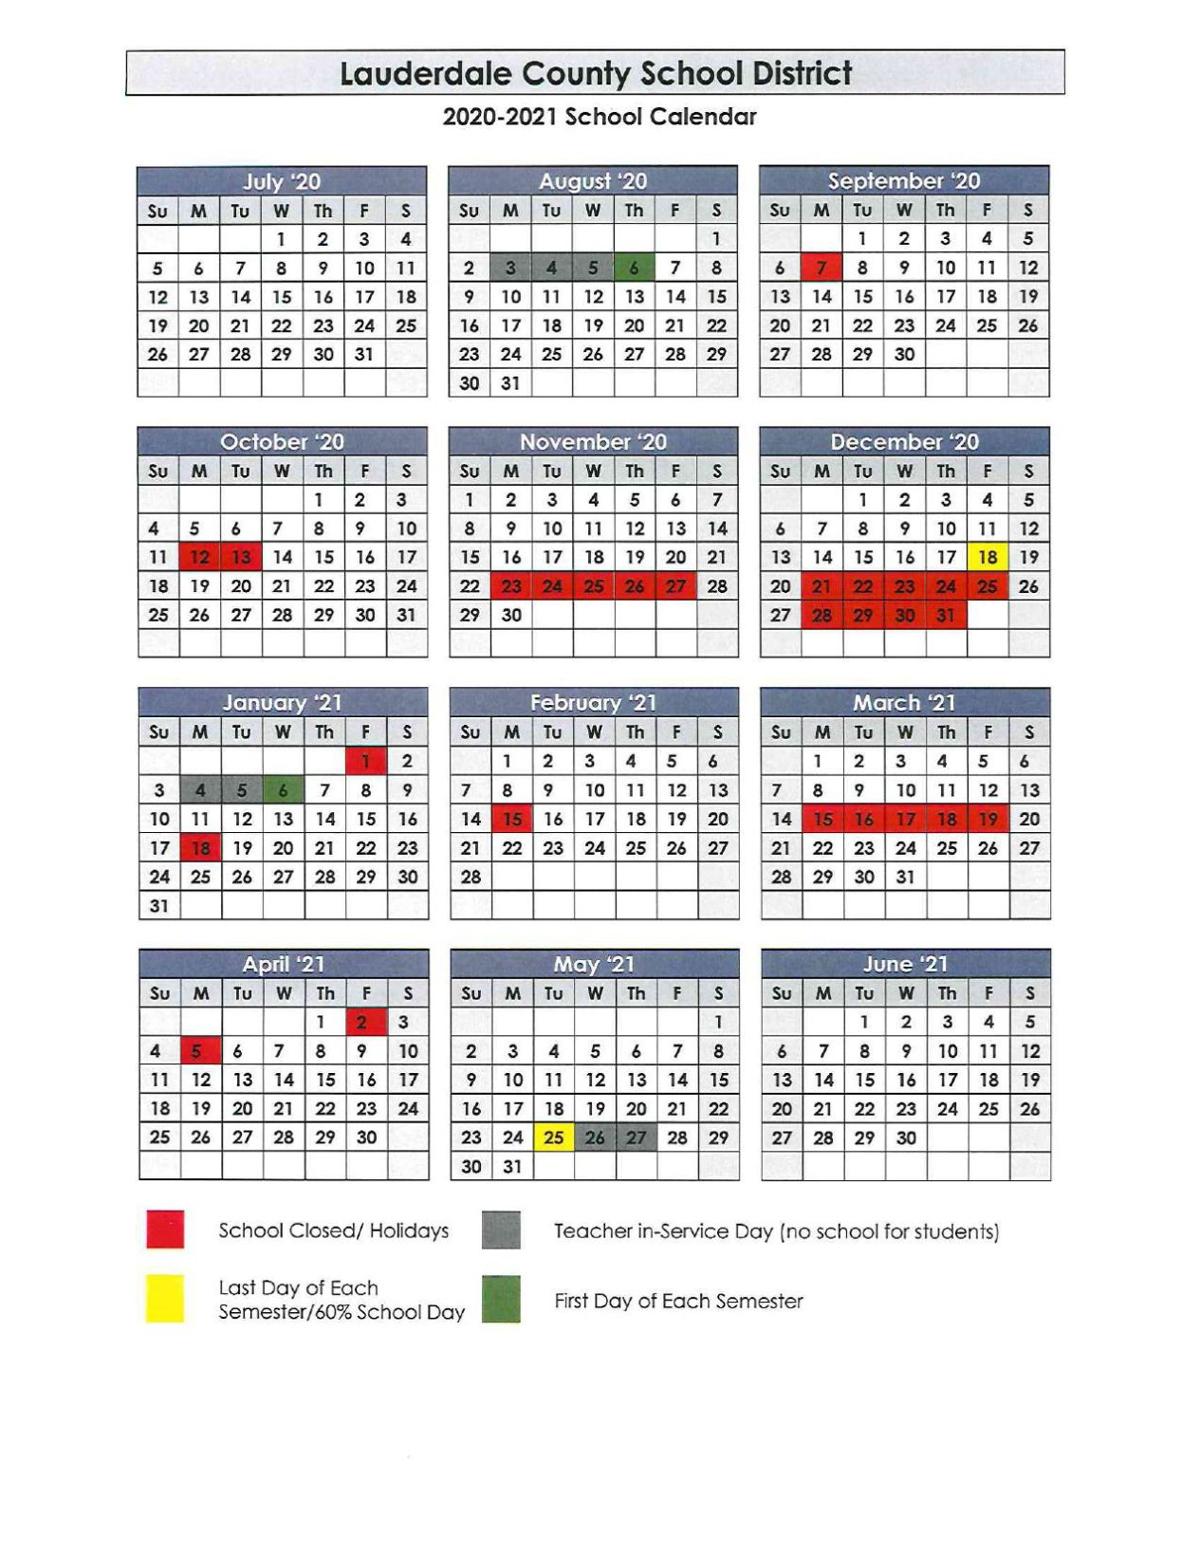 Meridian, Lauderdale County schools adopt 2020-2021 calendars | Local